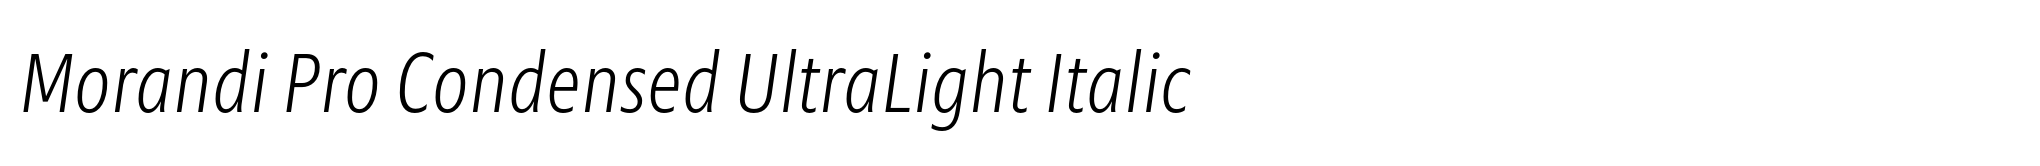 Morandi Pro Condensed UltraLight Italic image